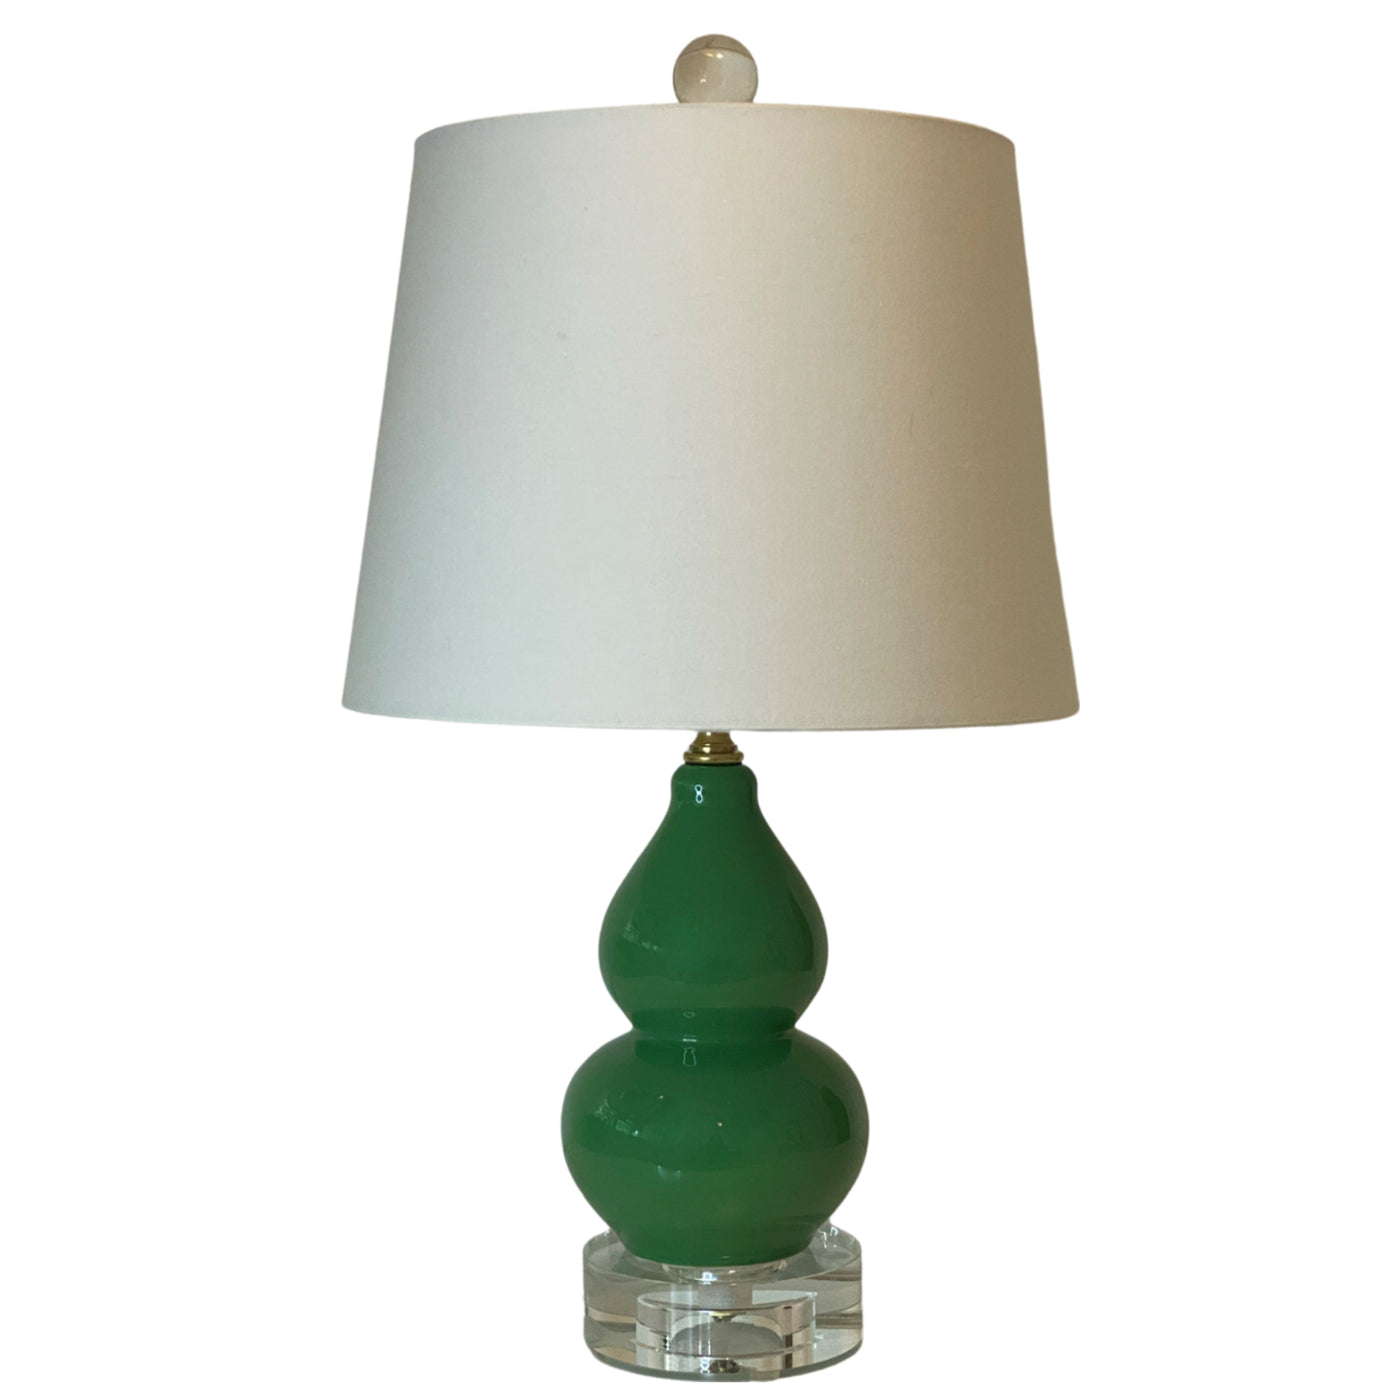 Small Green Lamp